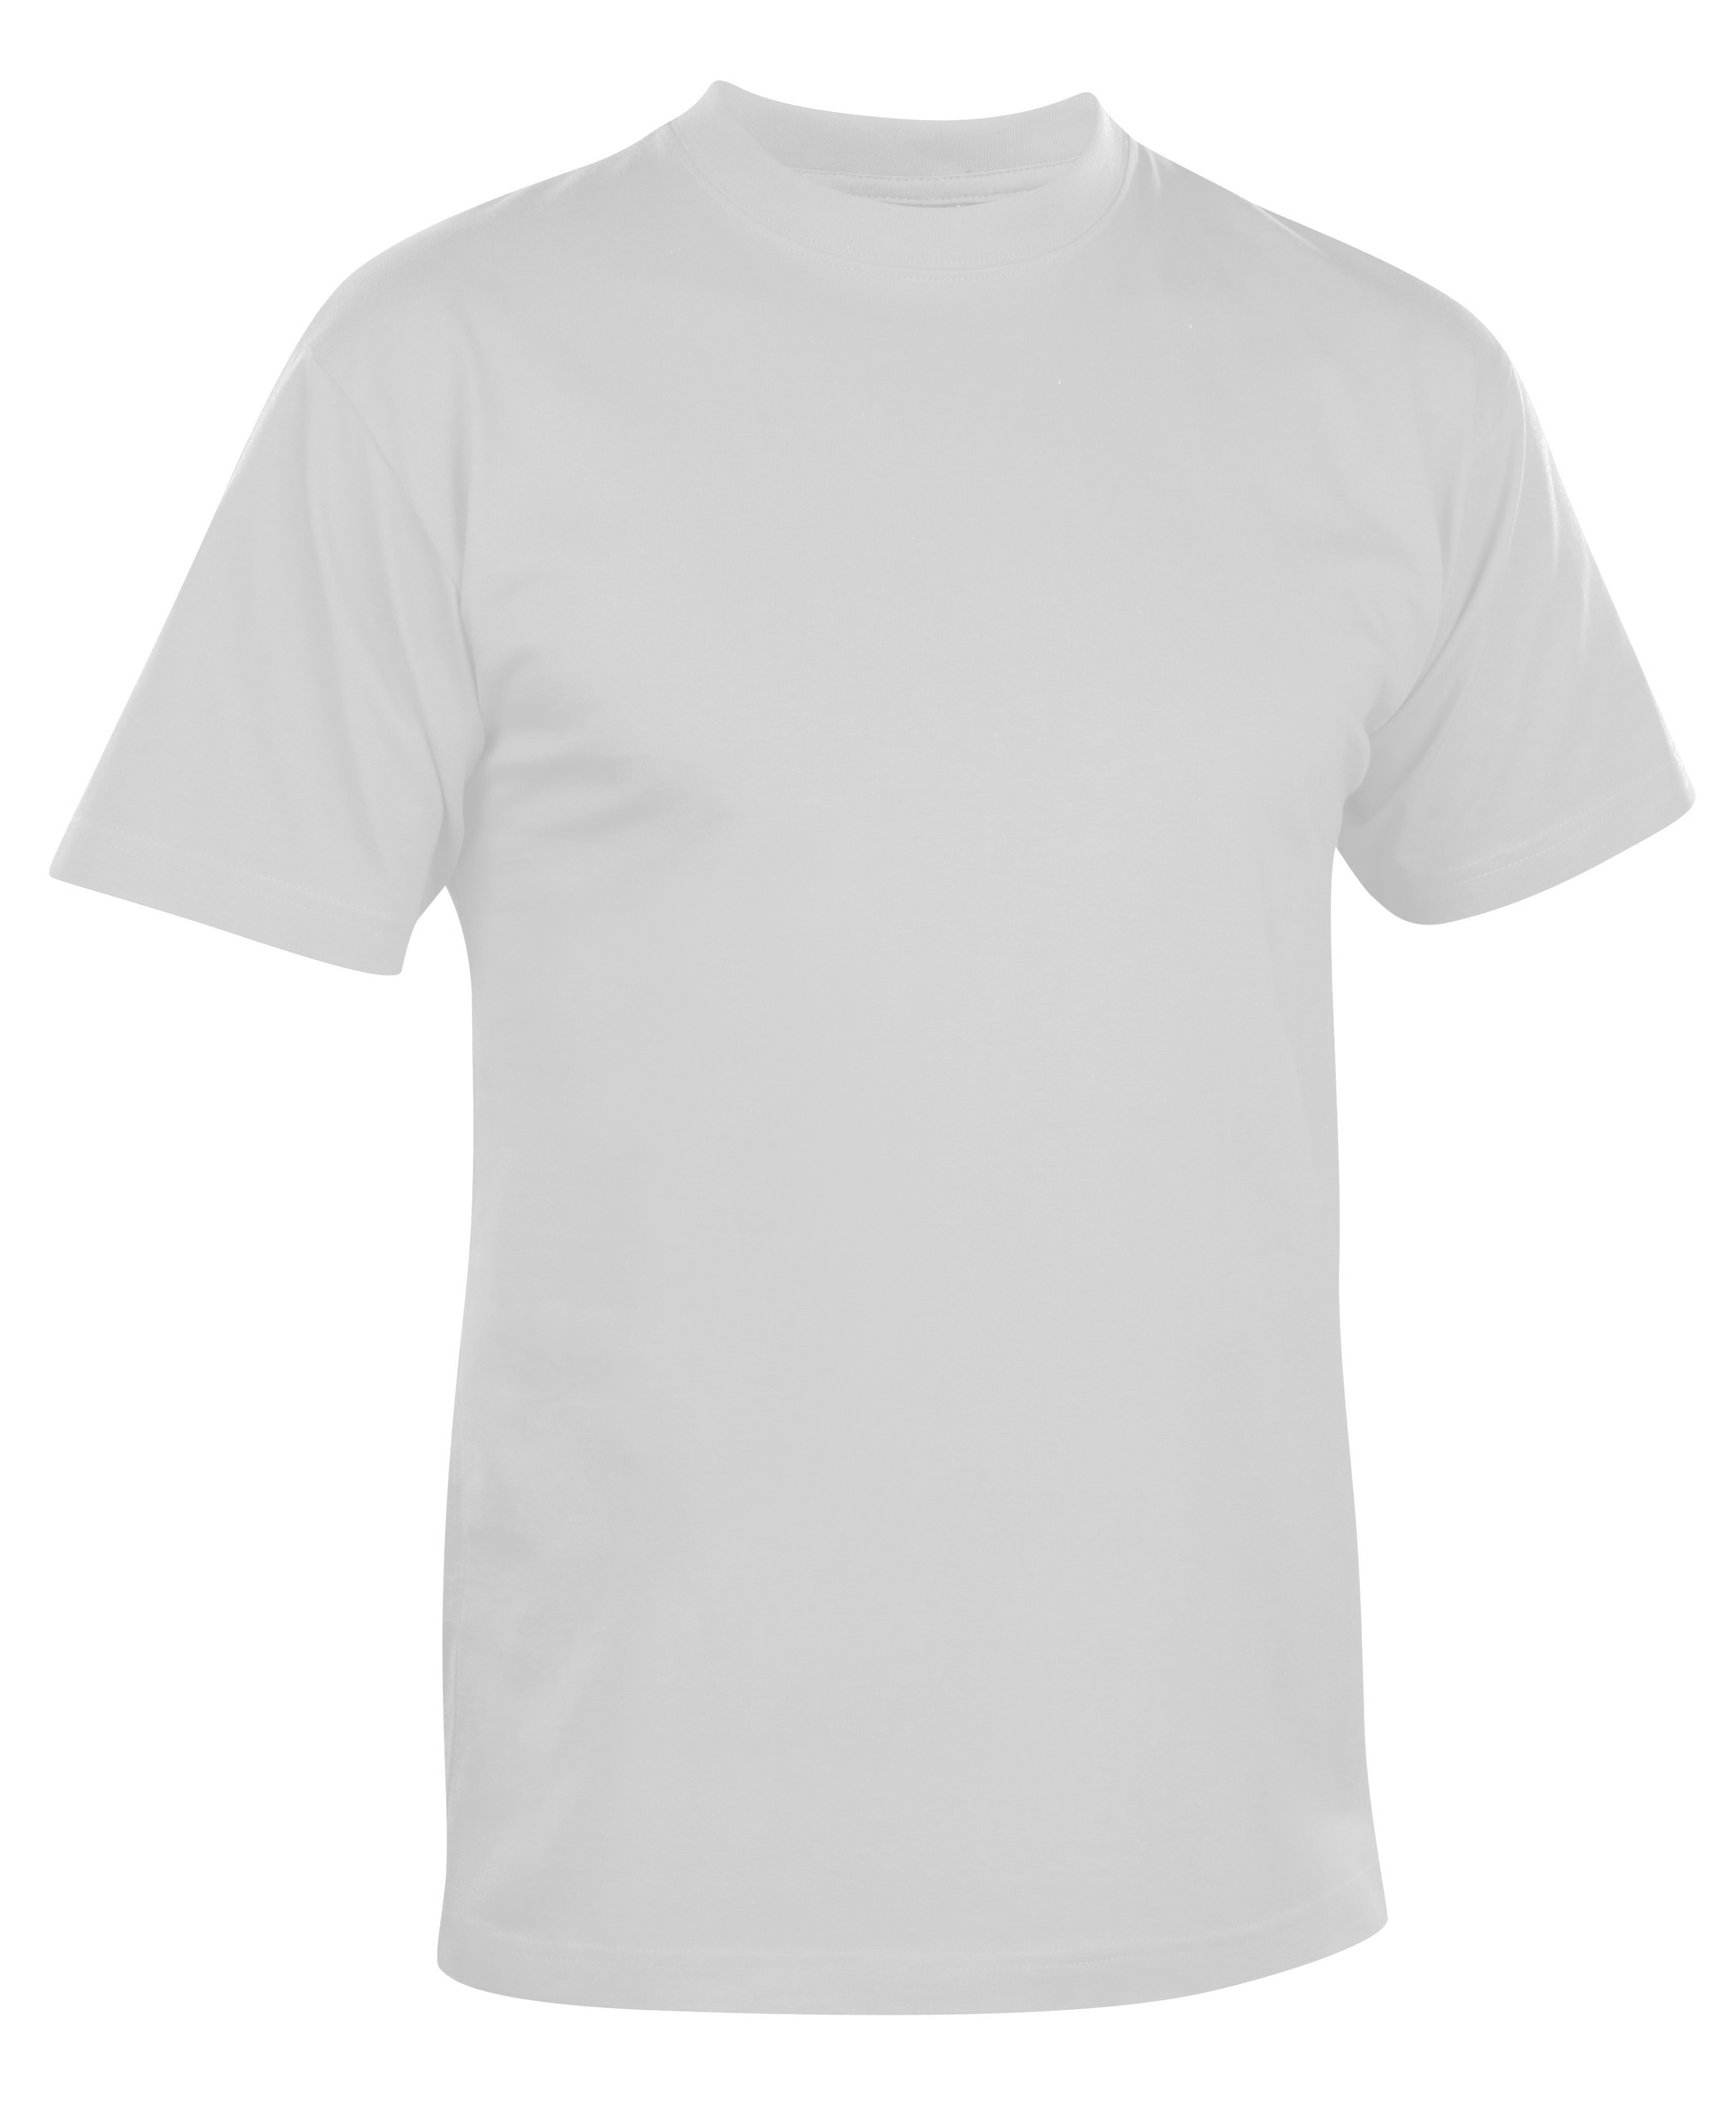 White T-Shirt PNG Image